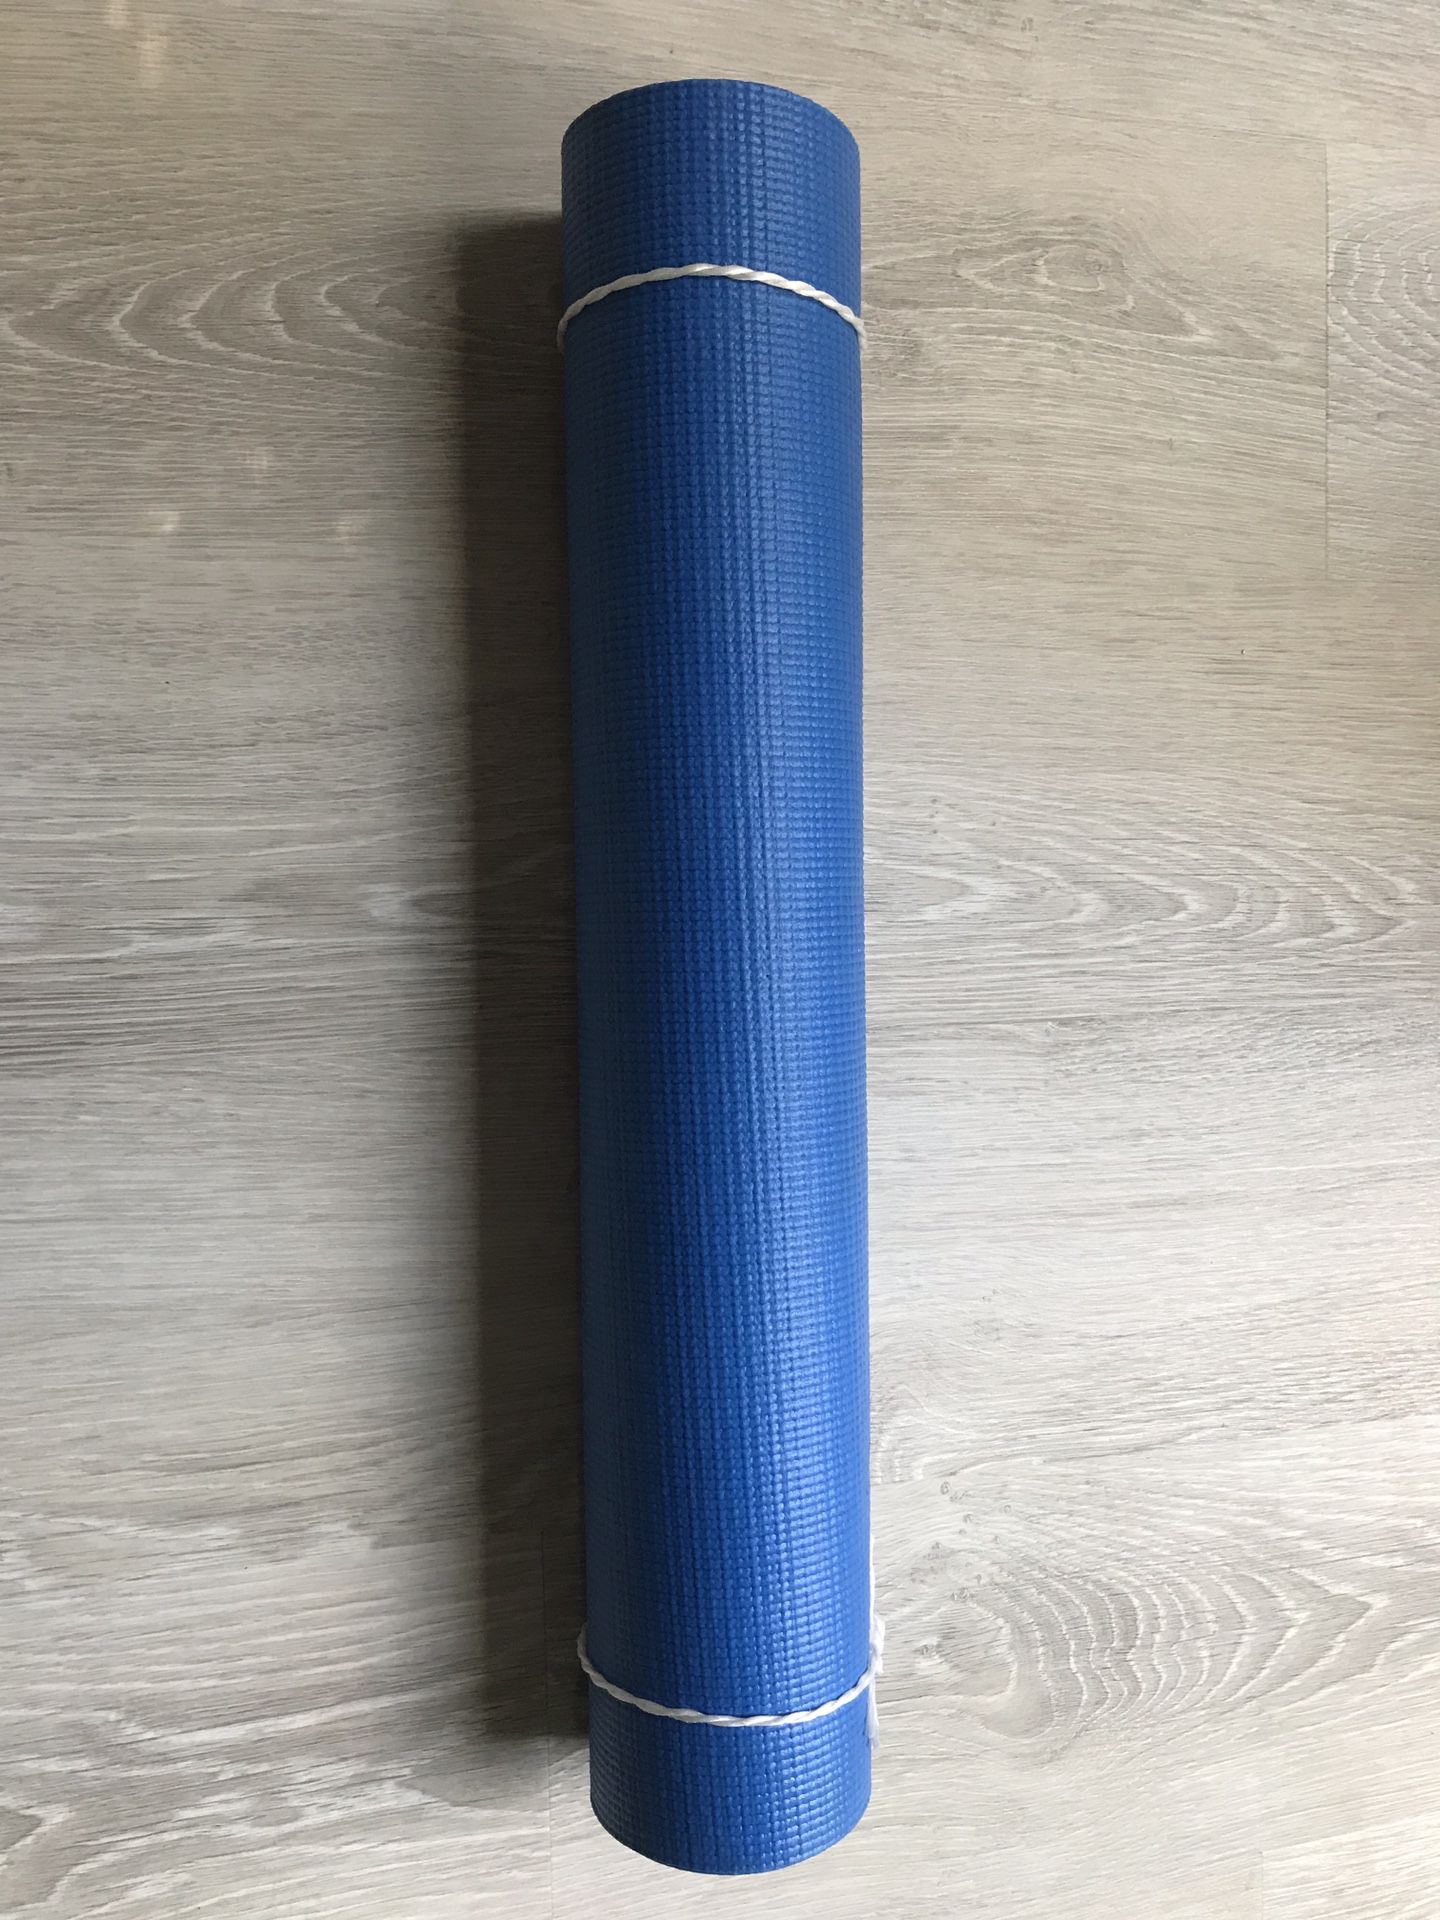 Brand new exercise Yoga Mat